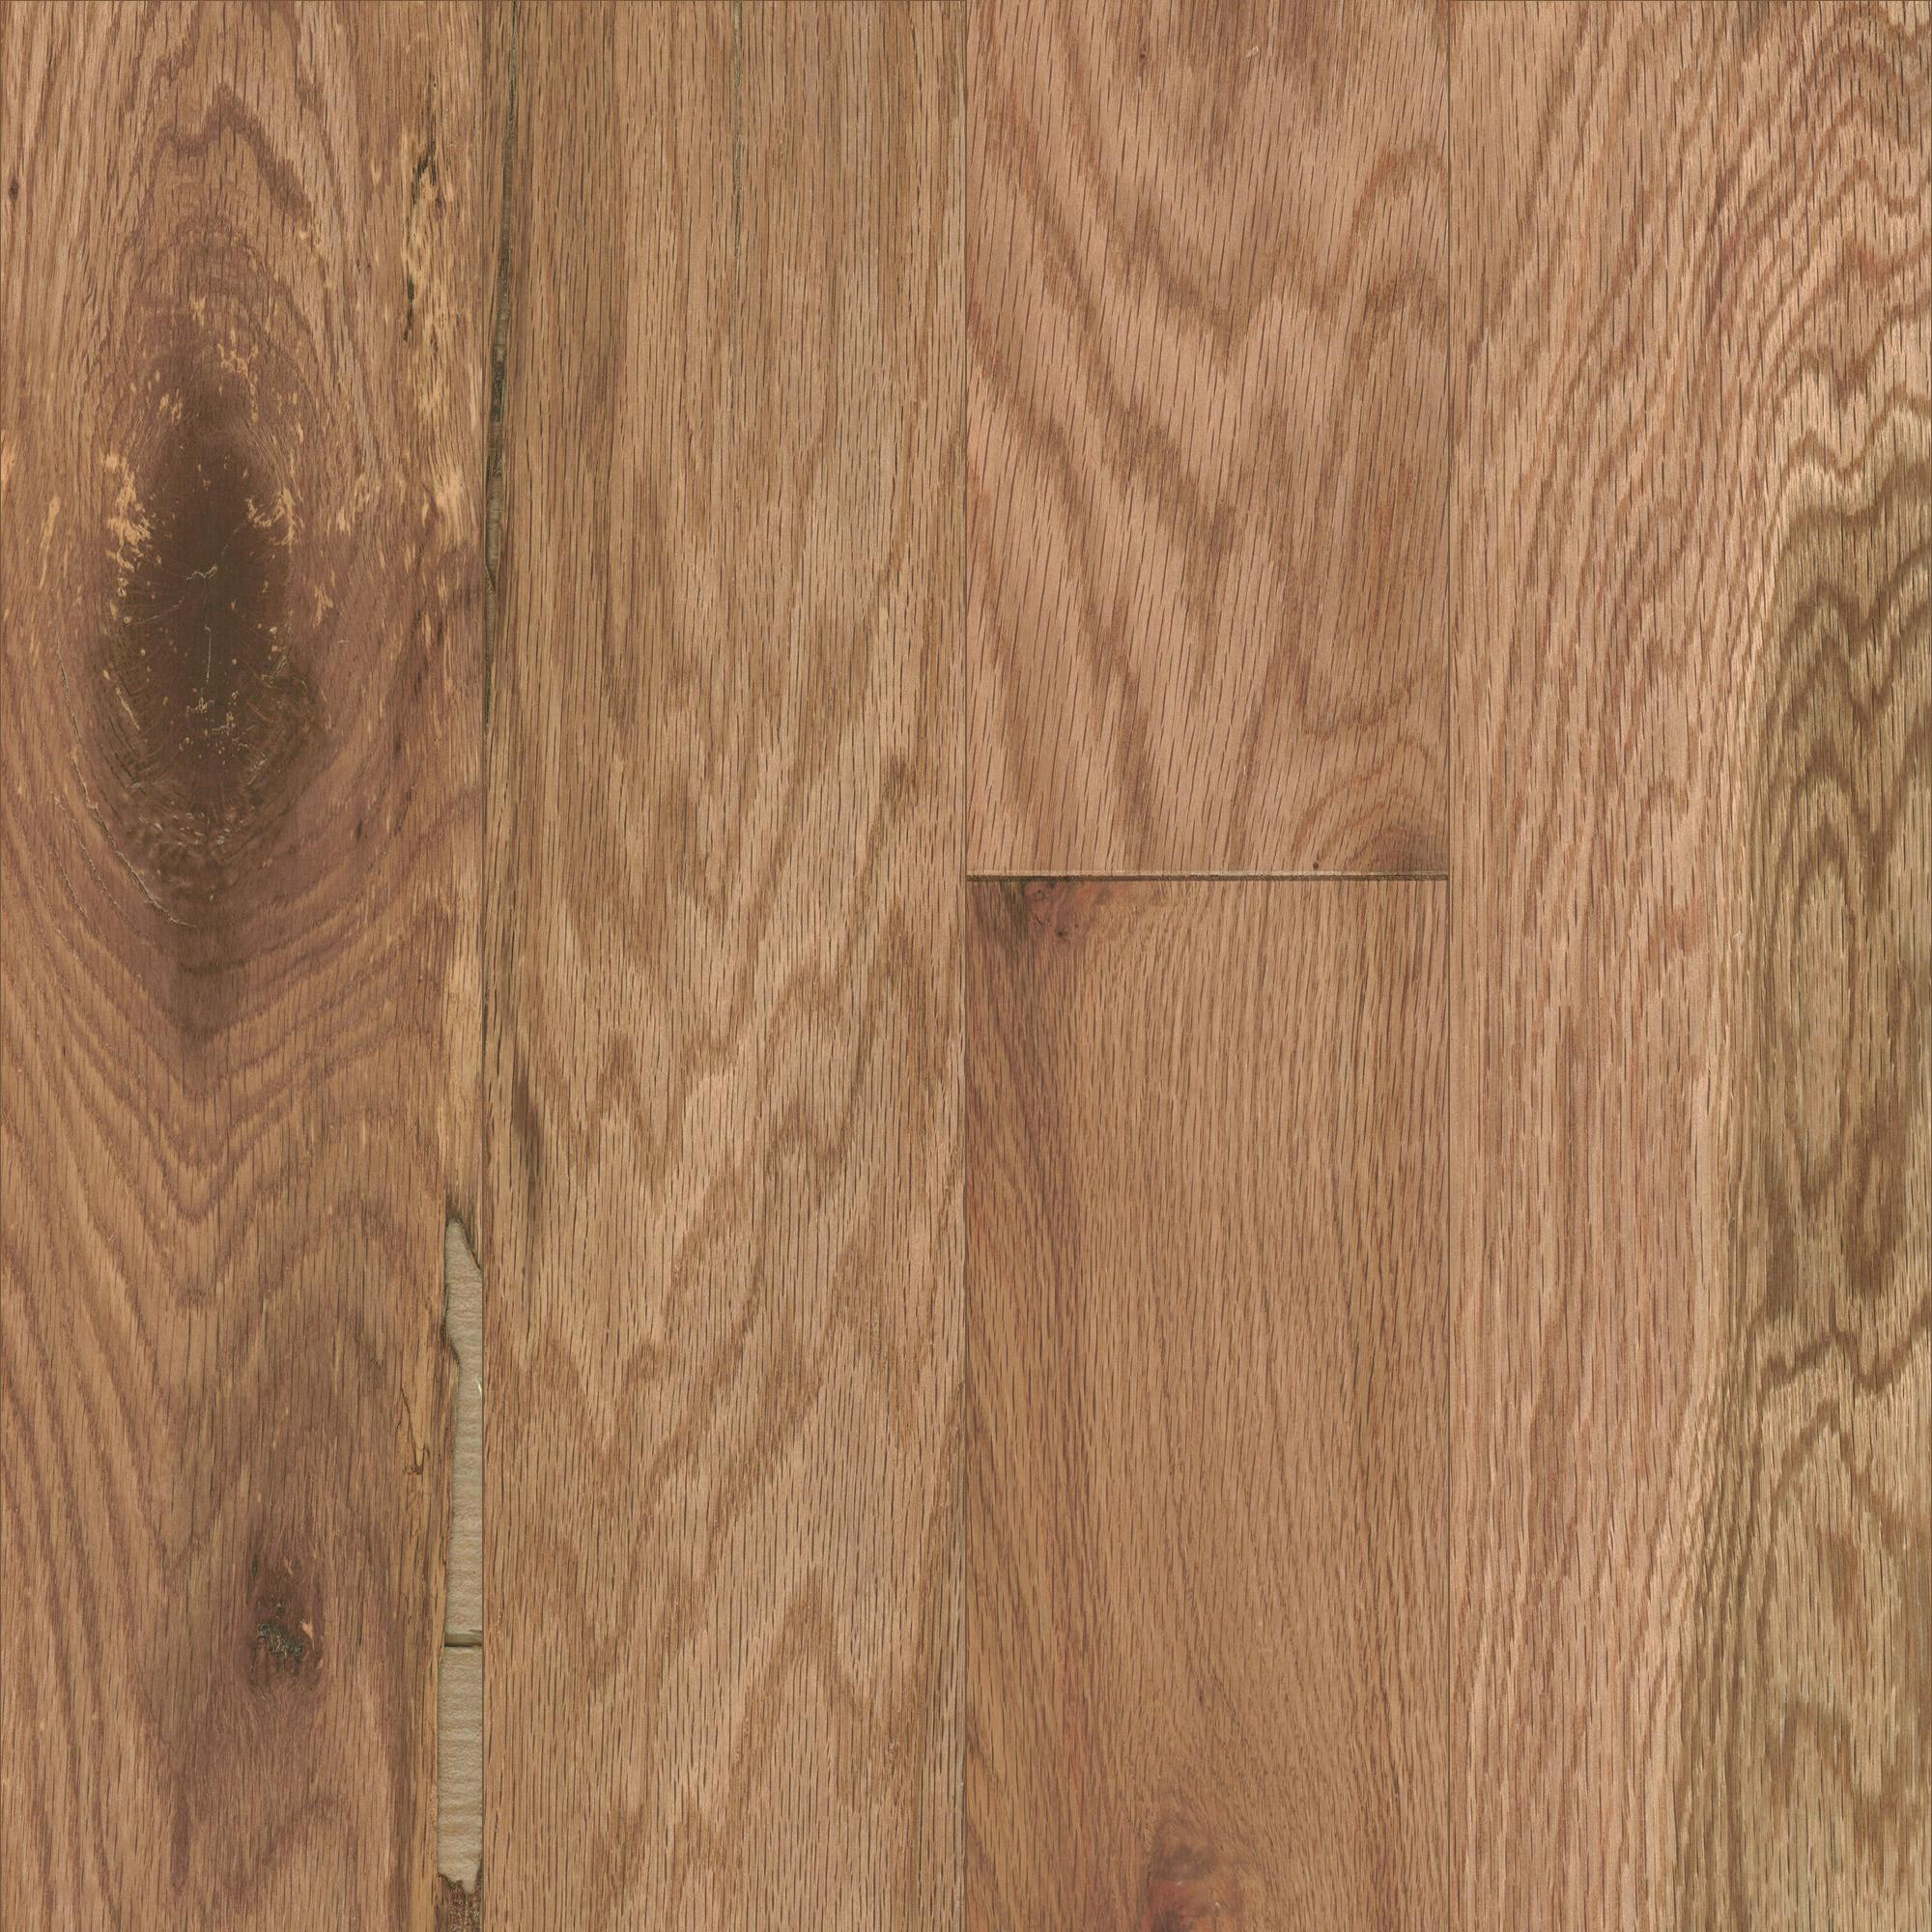 bruce 5 hardwood flooring of mullican ridgecrest red oak natural 1 2 thick 5 wide engineered for mullican ridgecrest red oak natural 1 2 thick 5 wide engineered hardwood flooring